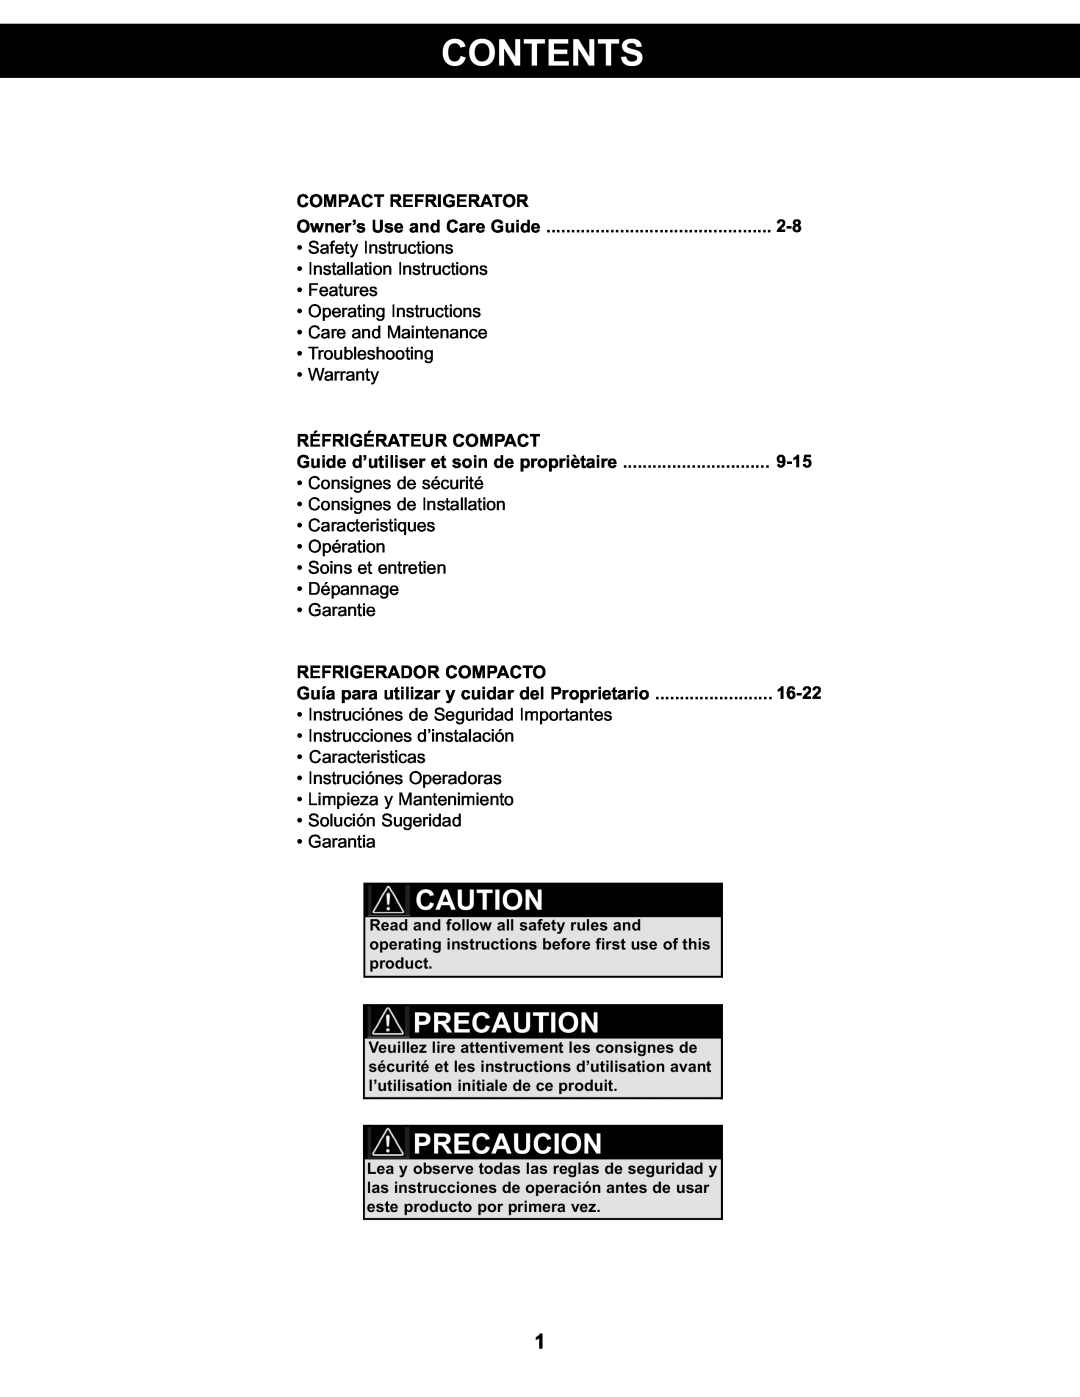 Sunbeam SBCR122BSL manual Contents, Precaution, Precaucion, Compact Refrigerator, Réfrigérateur Compact, 9-15, 16-22 